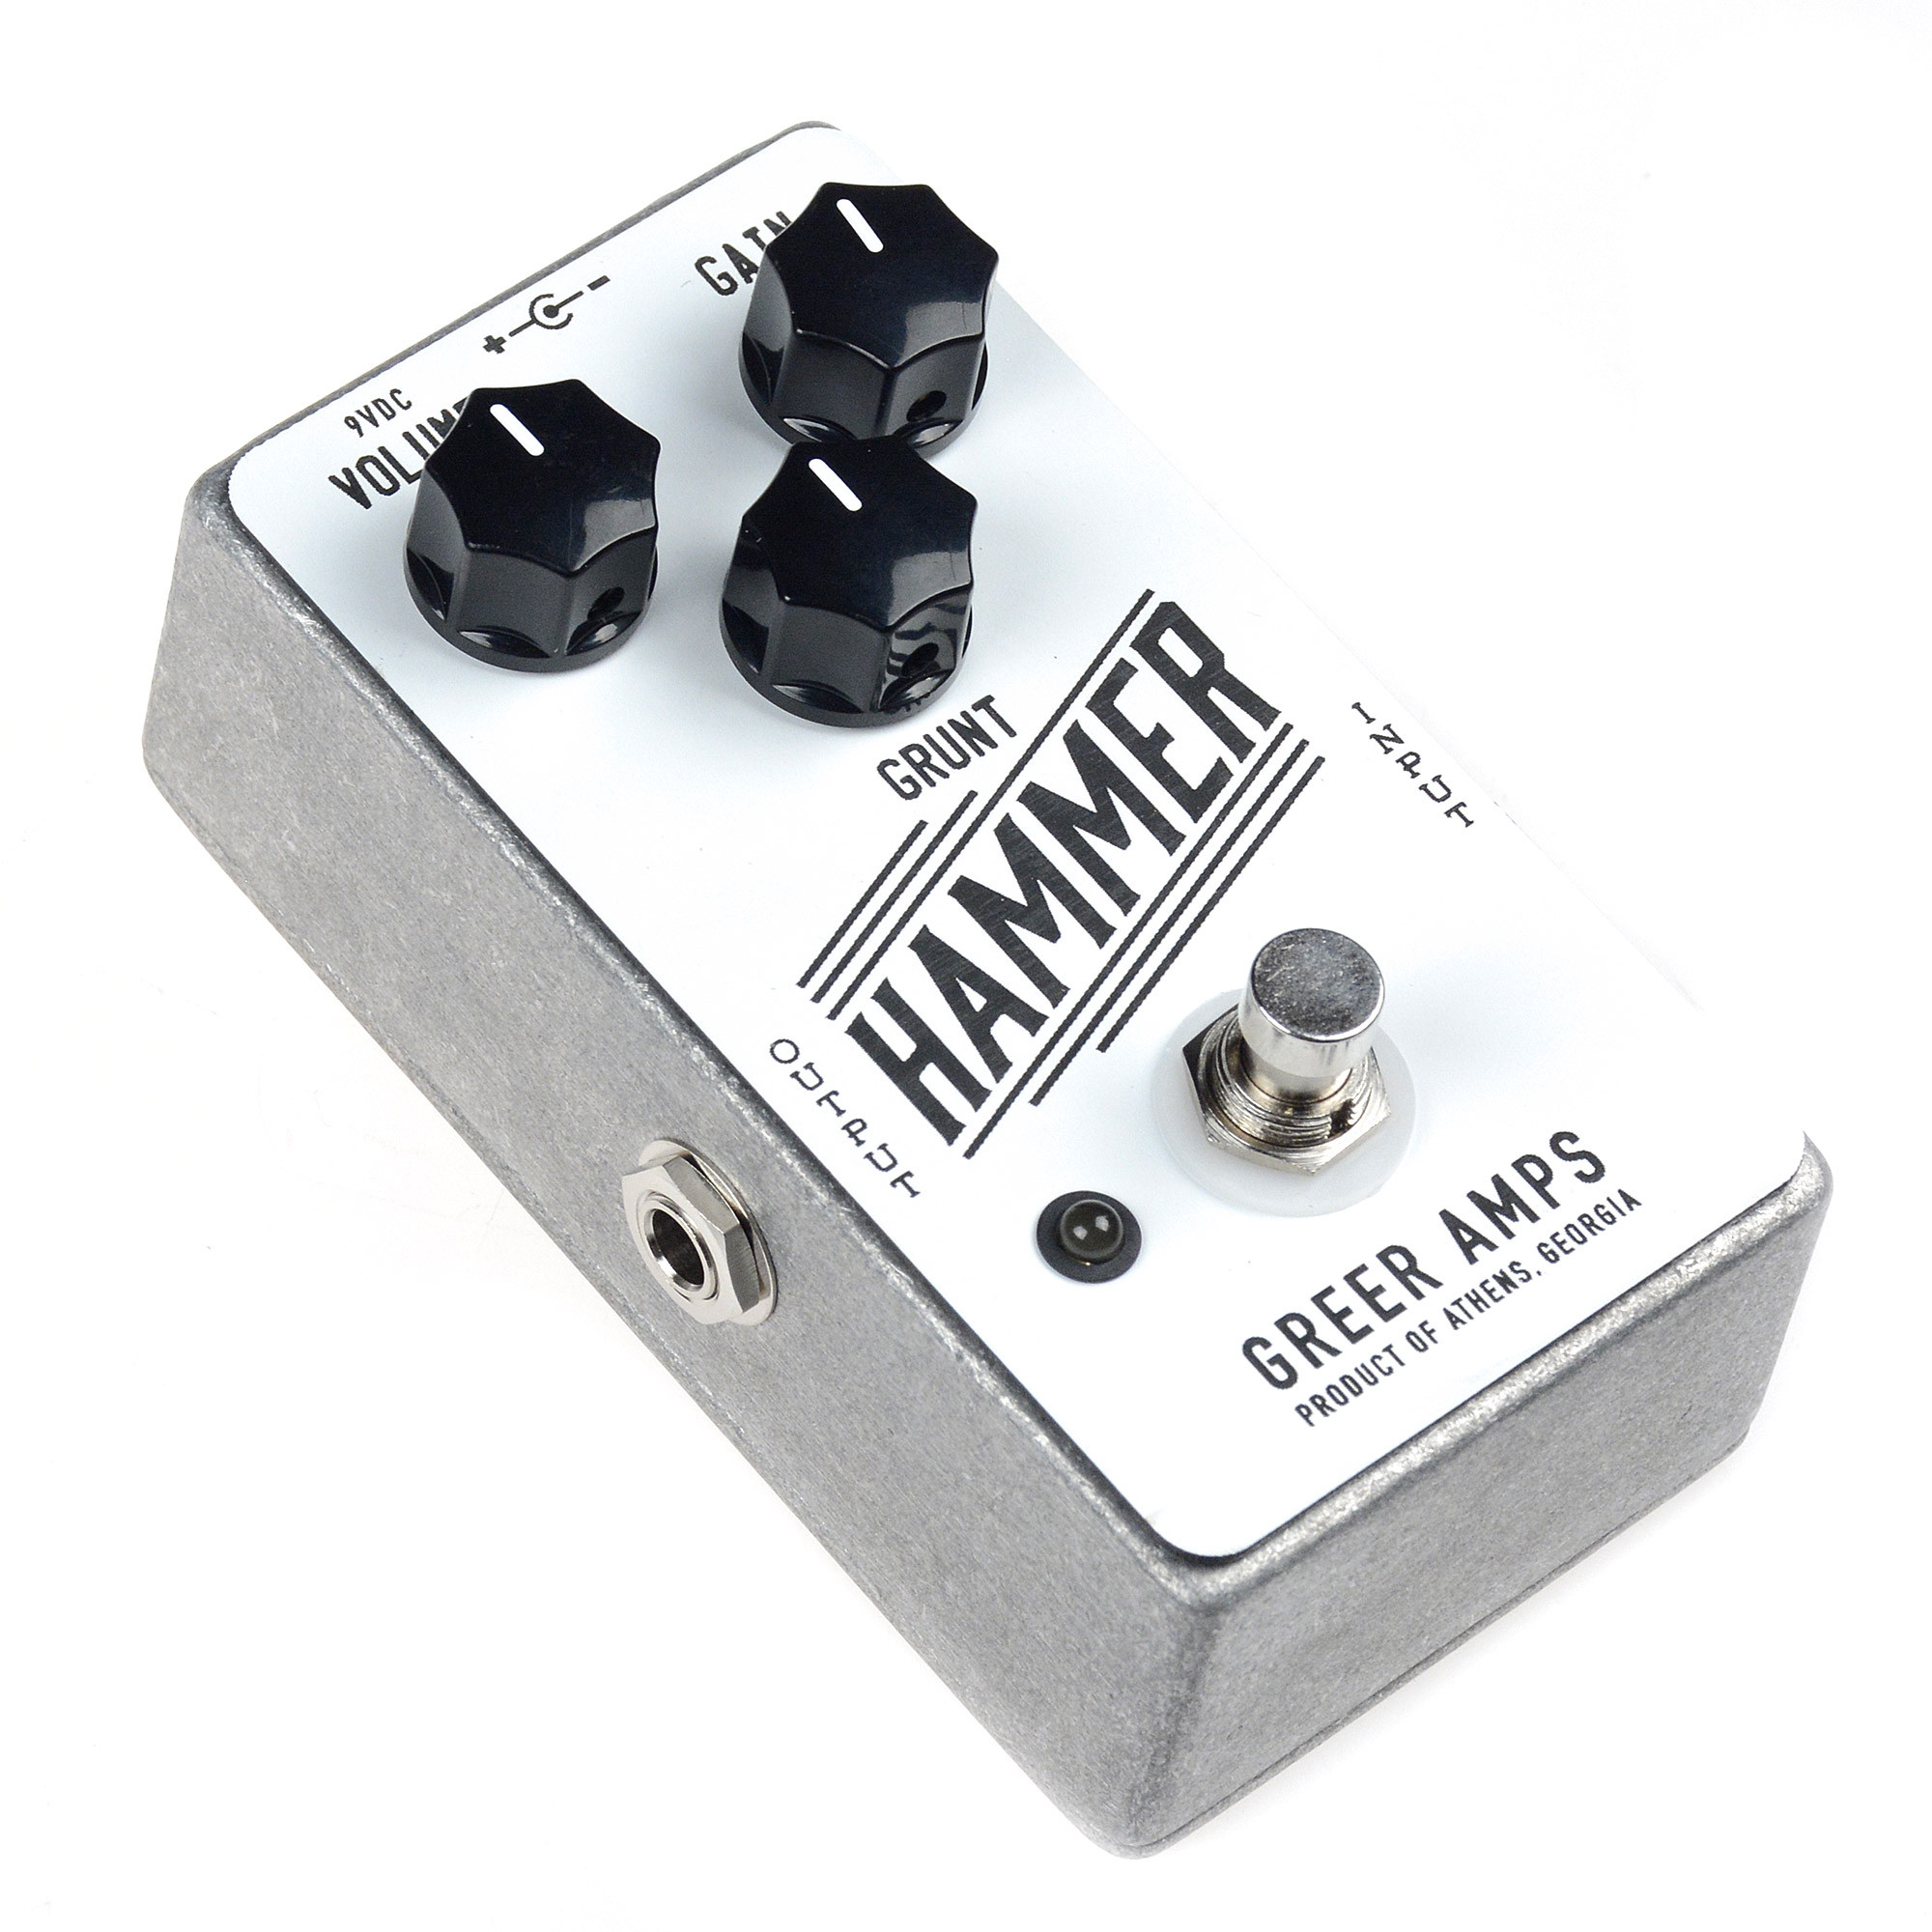 Greer Amps Hammer - Overdrive, distortion & fuzz effect pedal - Variation 1